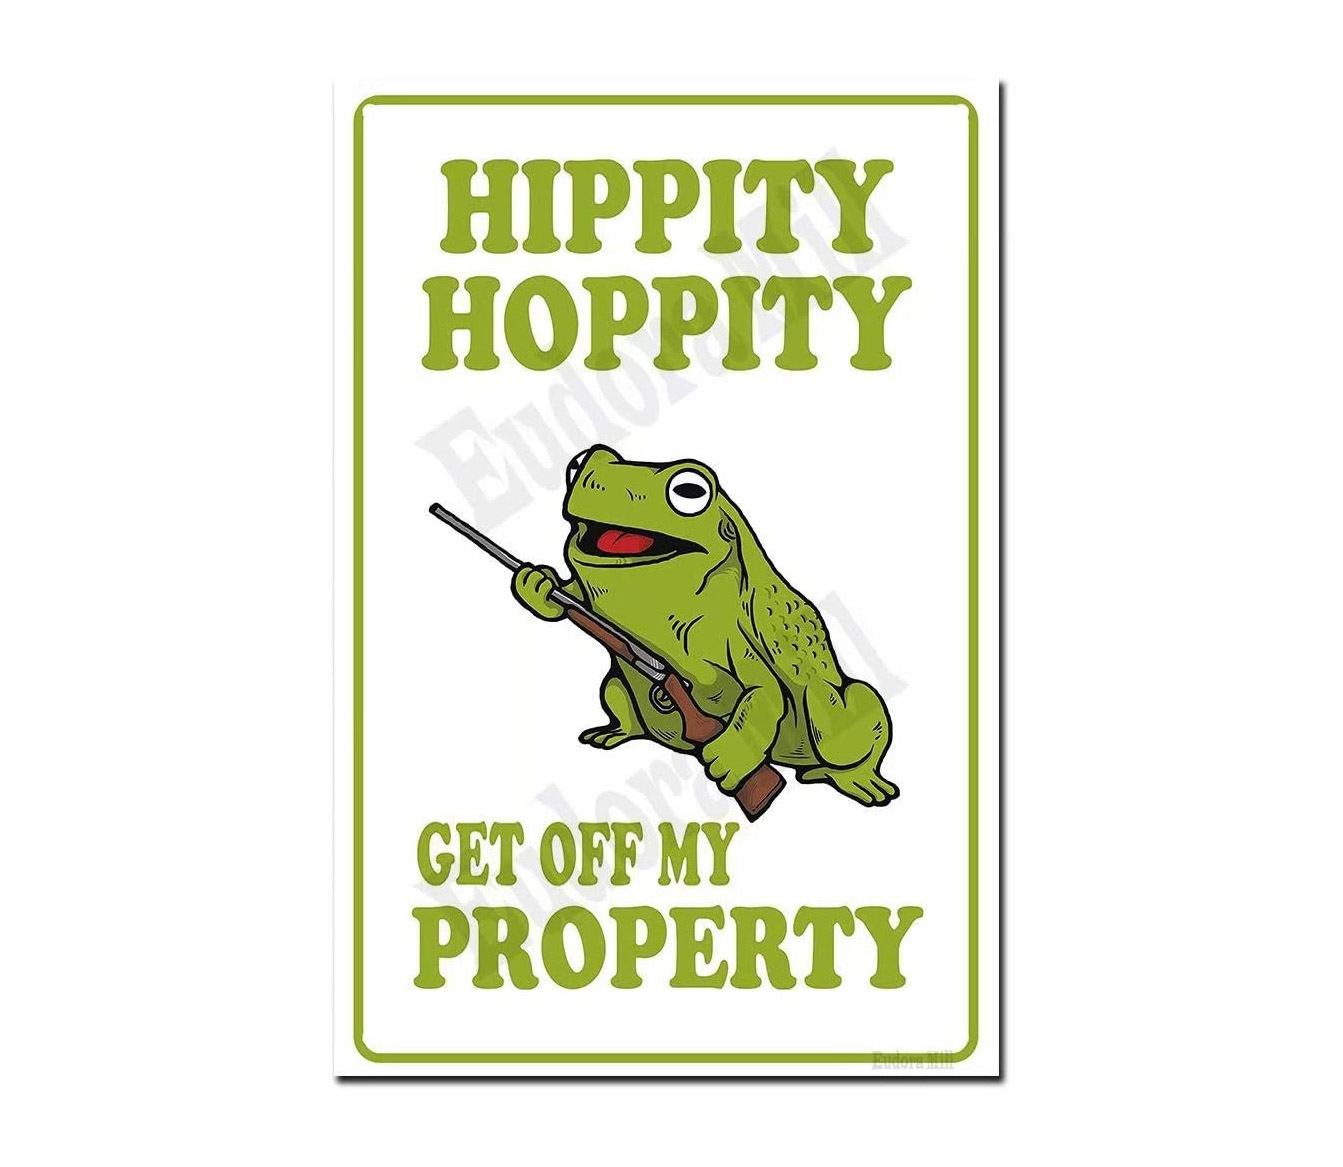 Hippity Hoppity Get Off My Property Sign